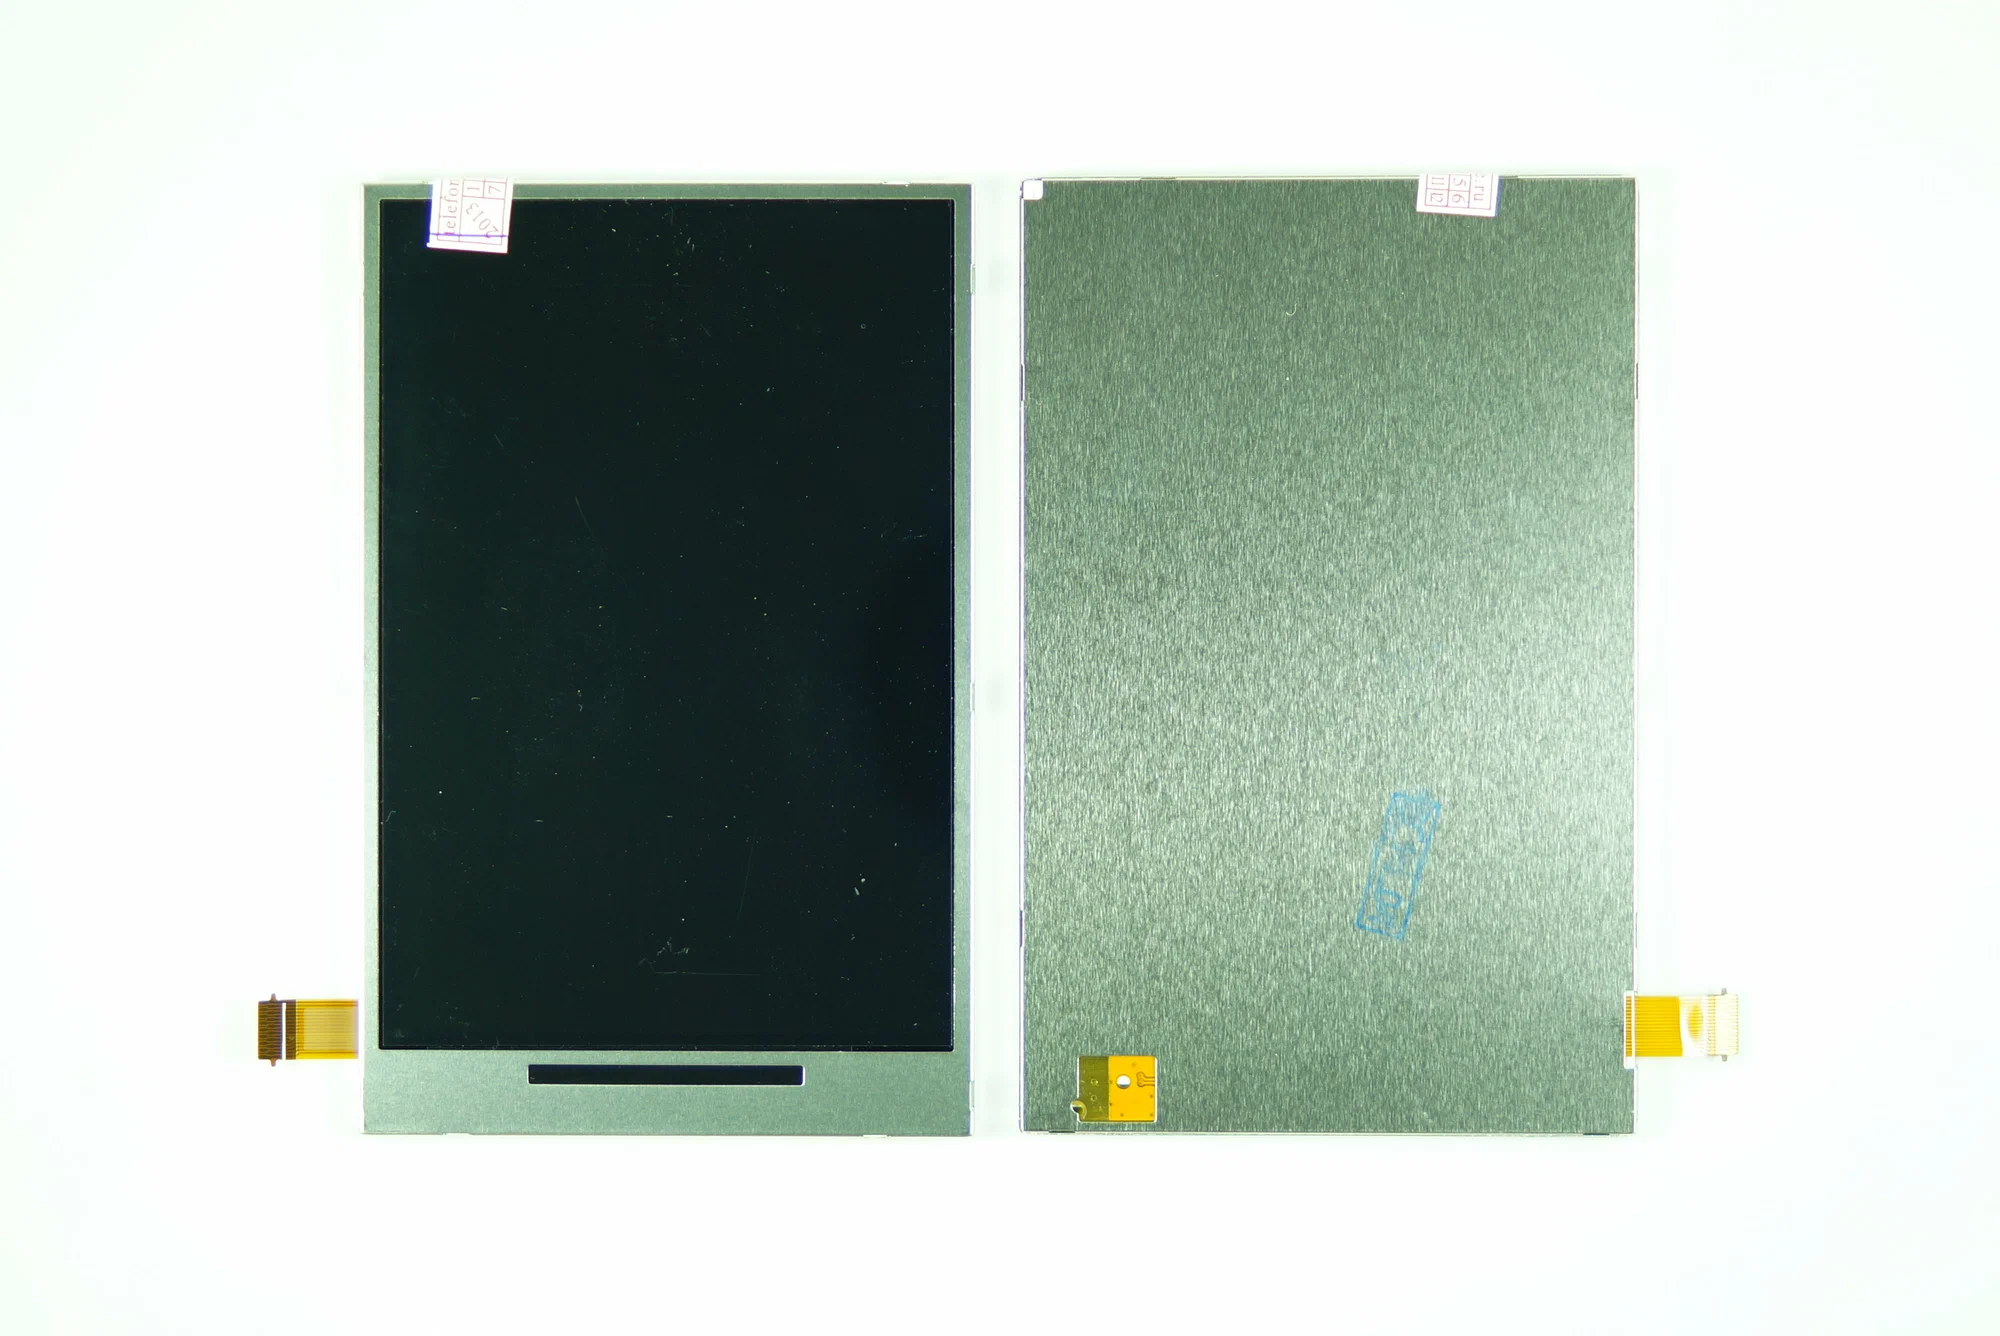 Дисплей (LCD) для Sony Xperia E/E dual C1505/C1605